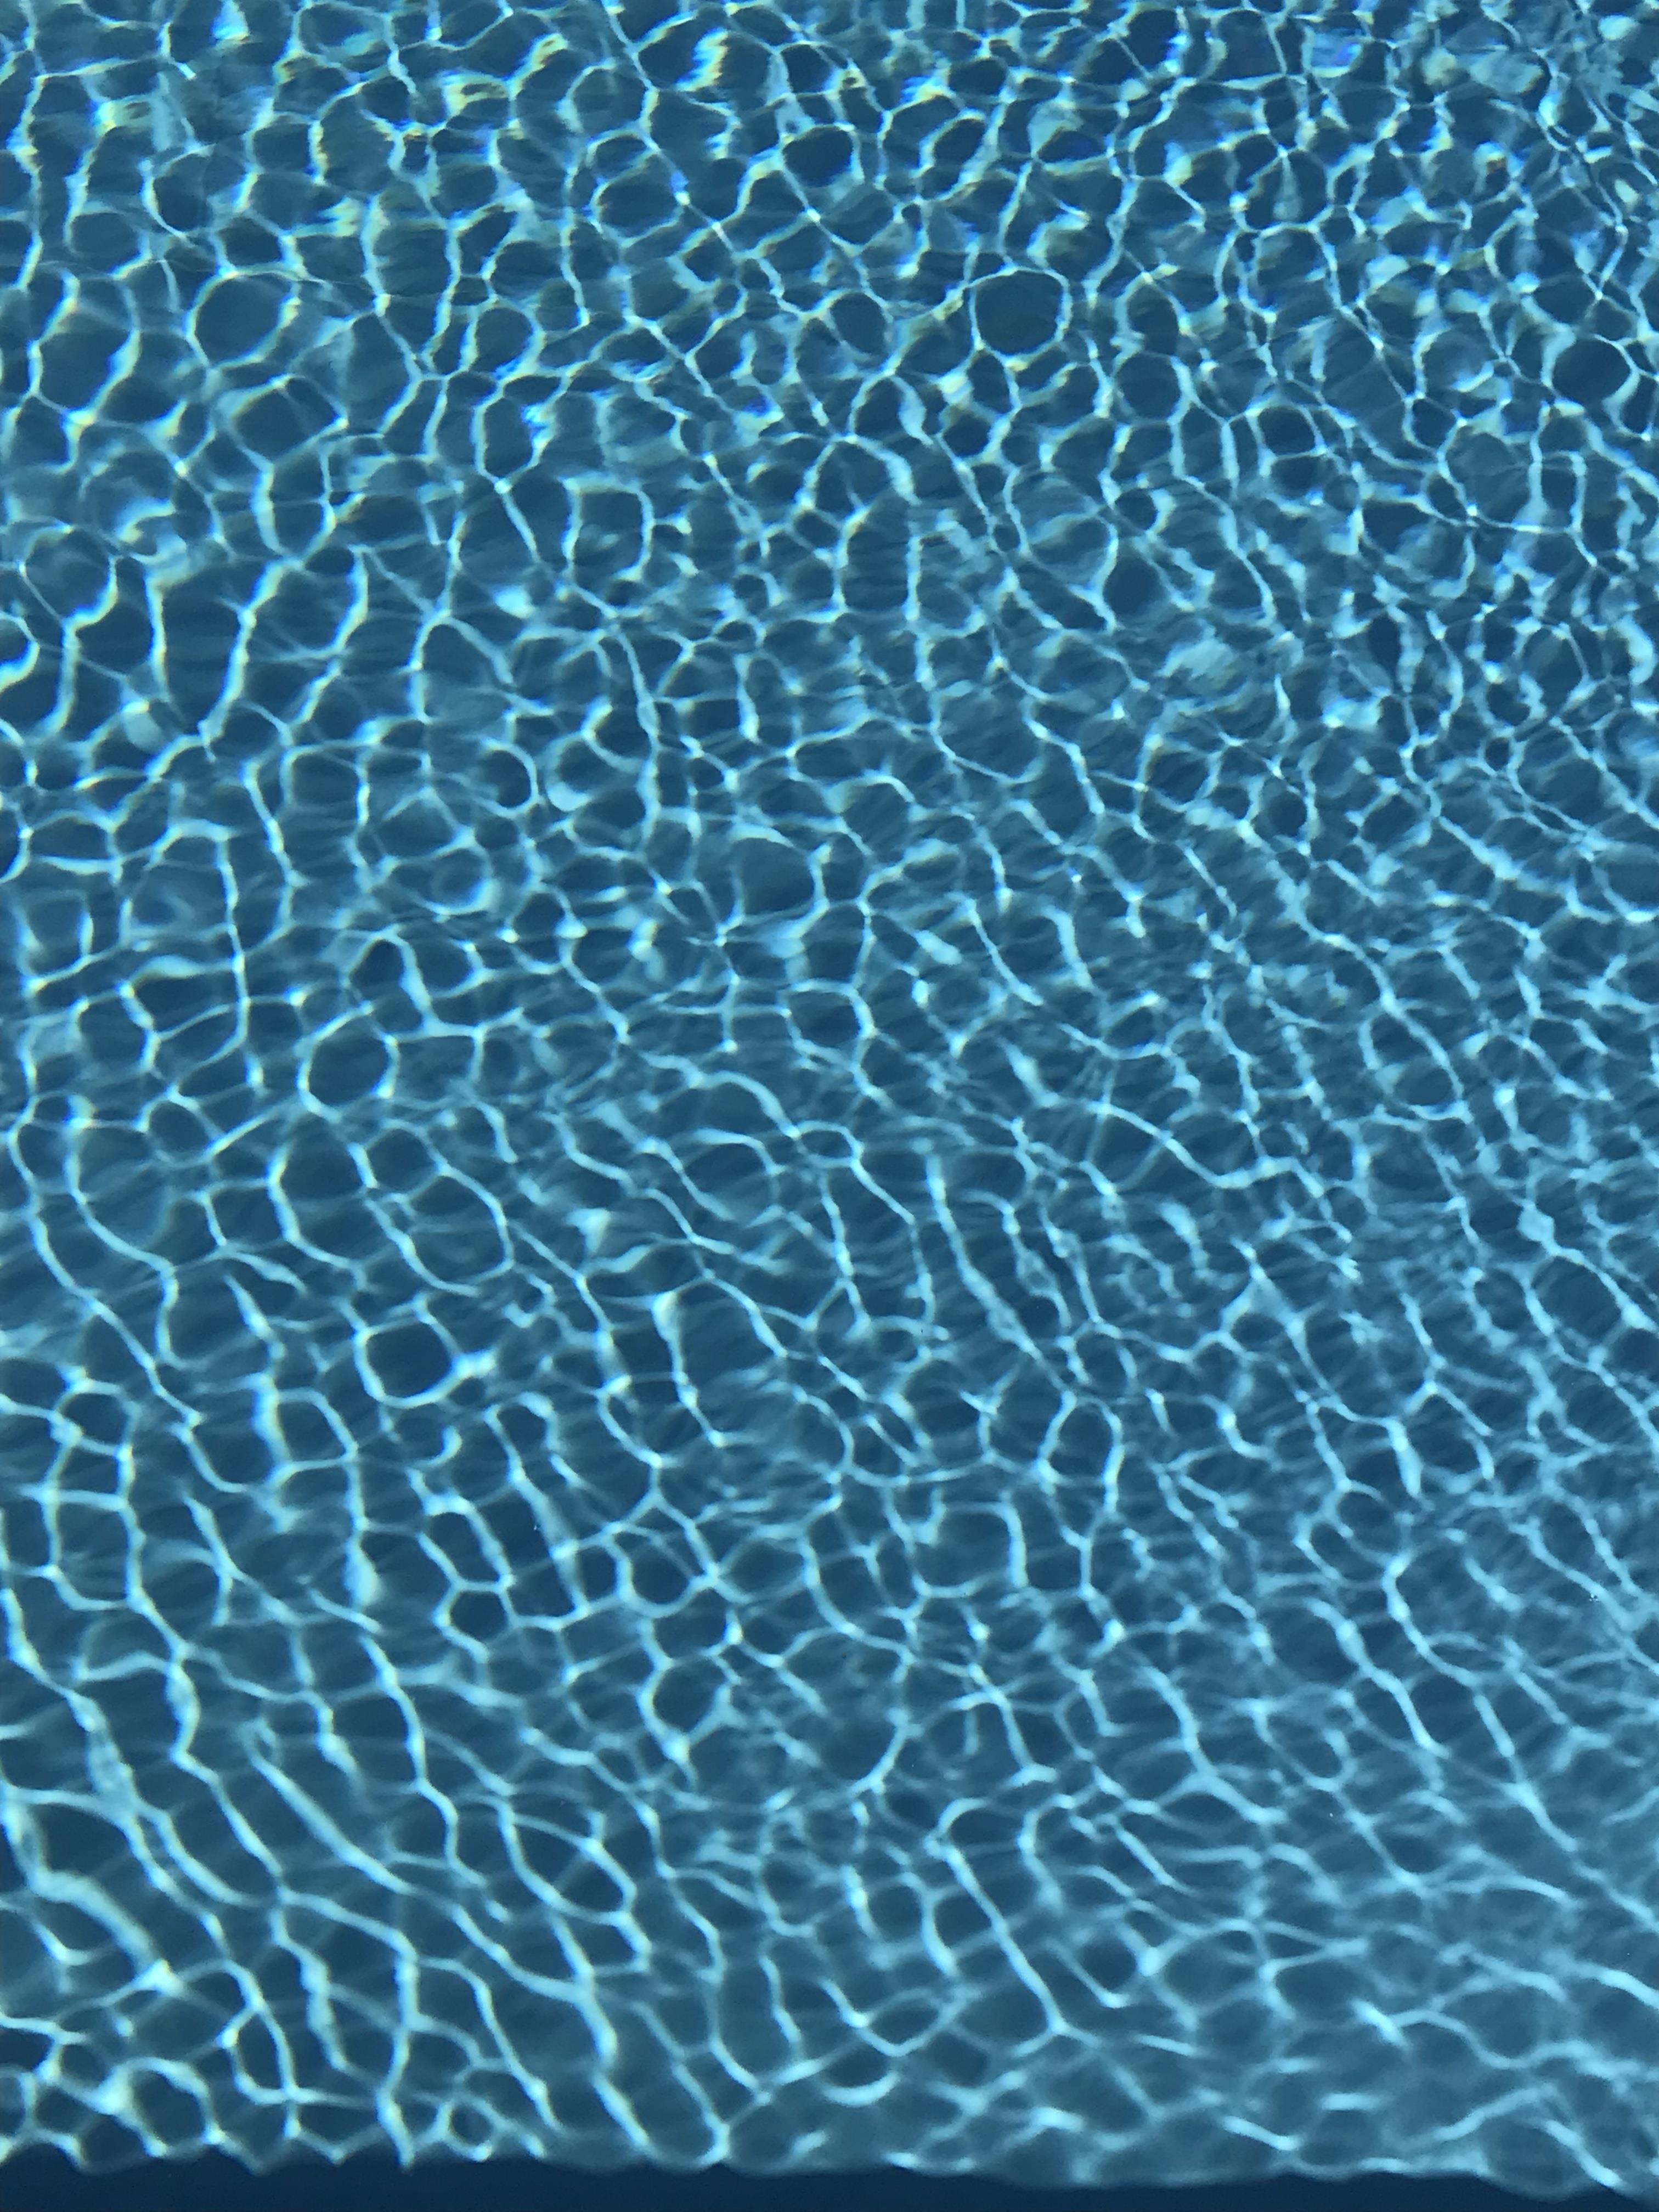 Poolwasser